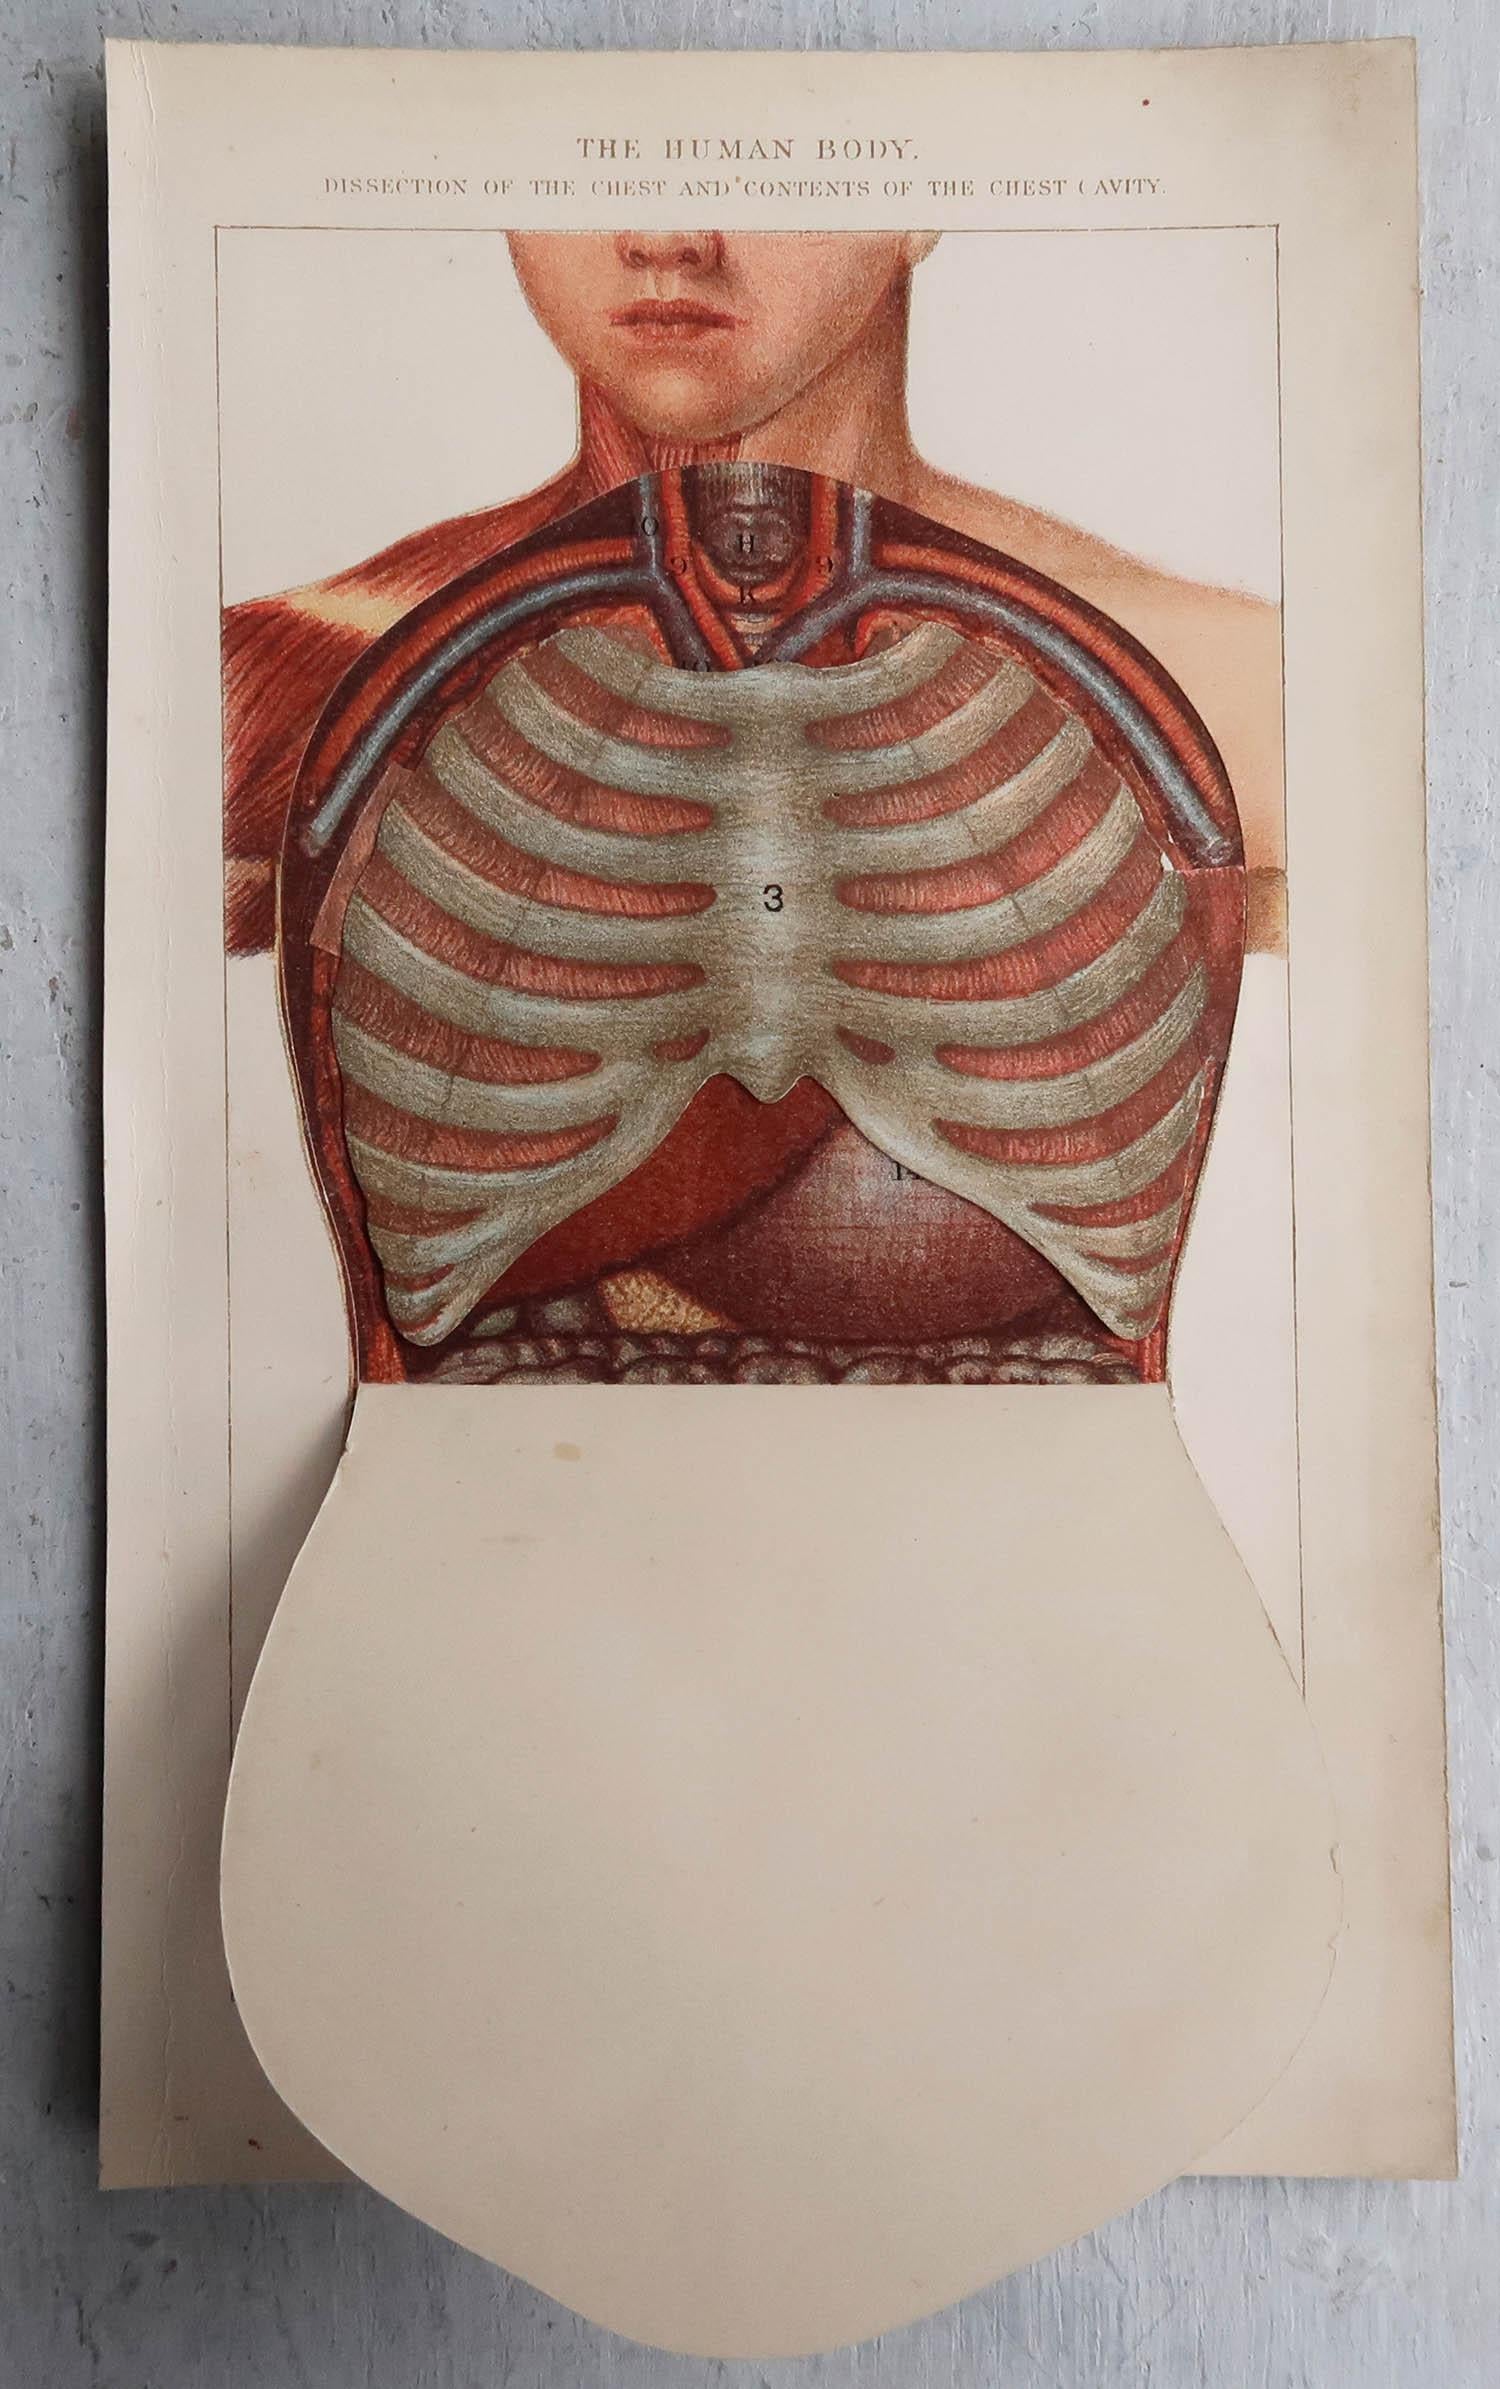 human chest cavity